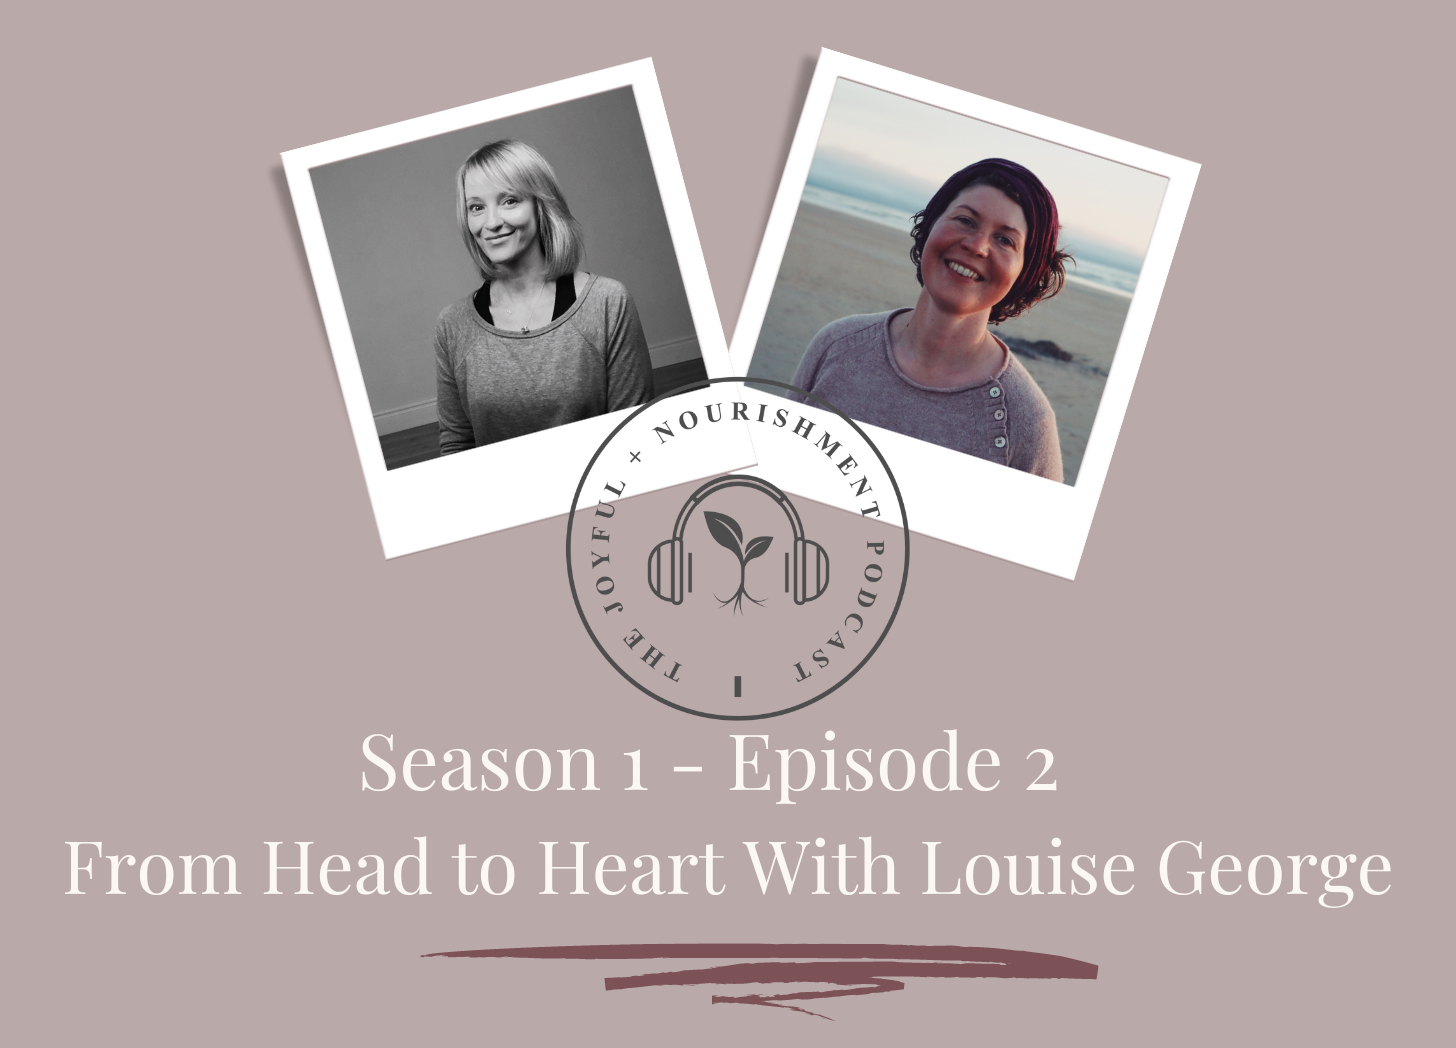 The Joyful Nourishment Podcast episode 2 with Louise George